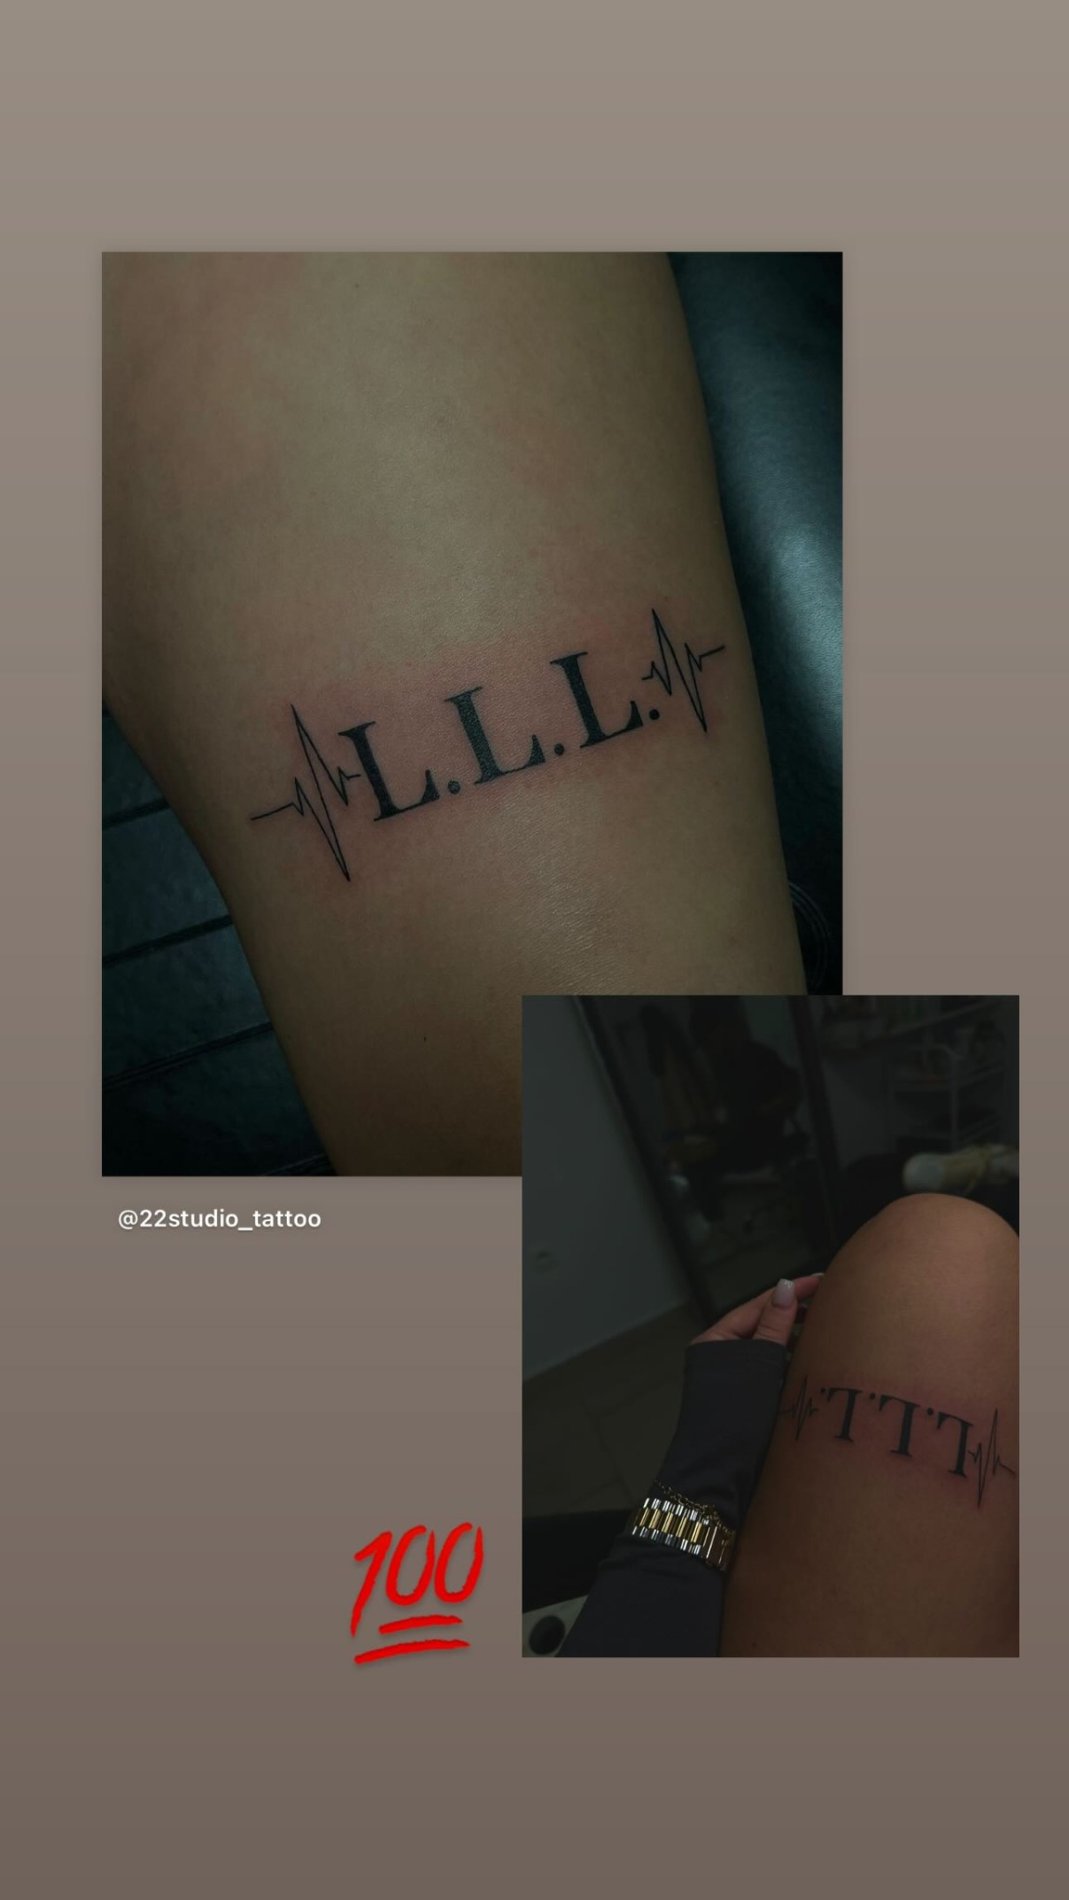 Laura ima novo tetovažo. Vir: Instagram